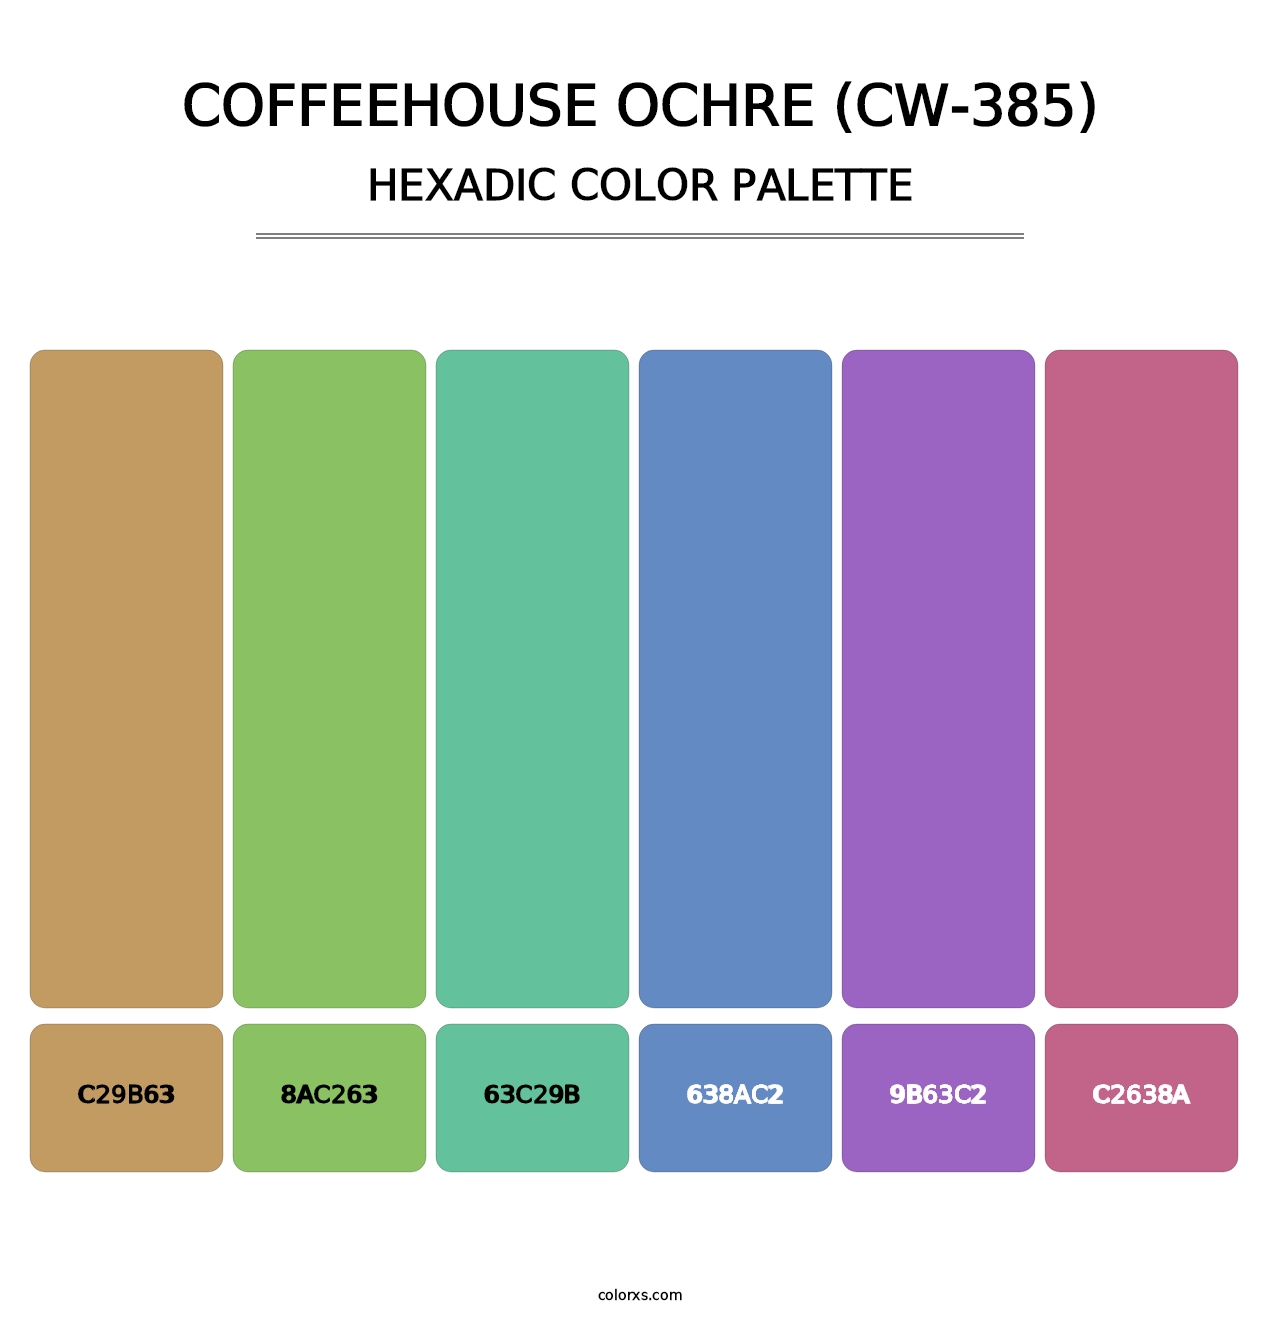 Coffeehouse Ochre (CW-385) - Hexadic Color Palette